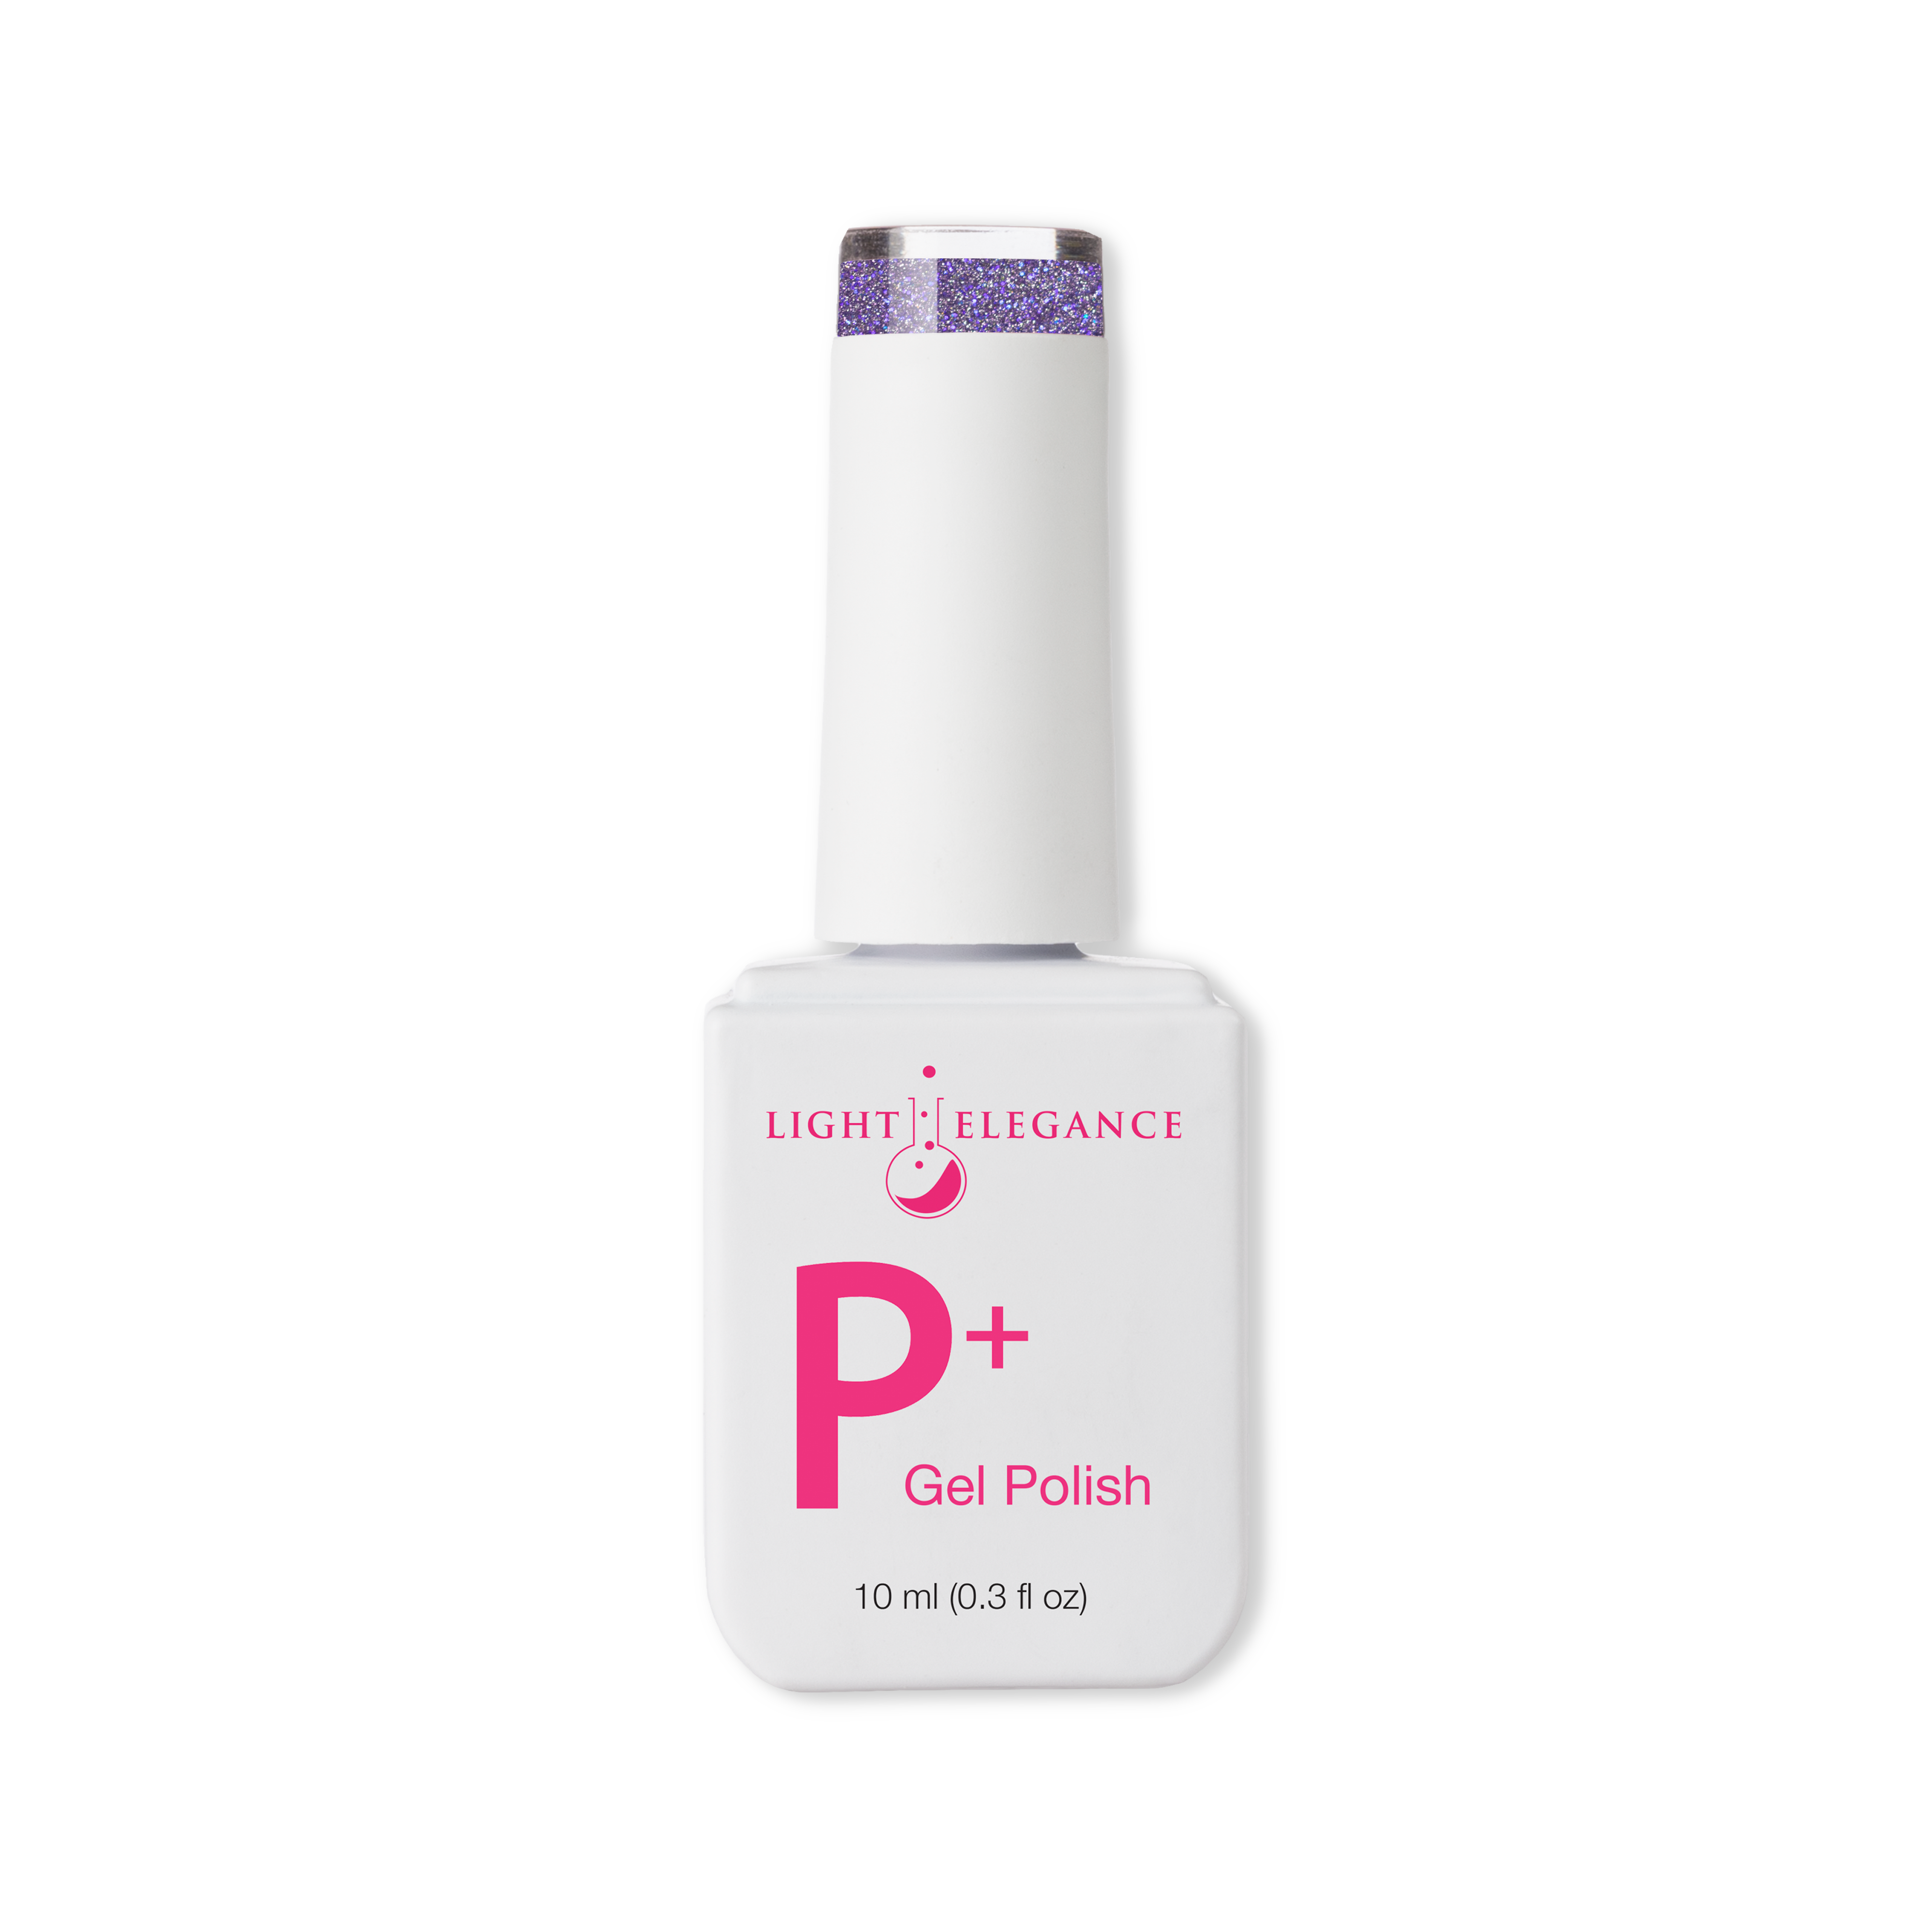 Light Elegance P+ Soak Off Glitter Gel - Supernova :: New Packaging - Creata Beauty - Professional Beauty Products